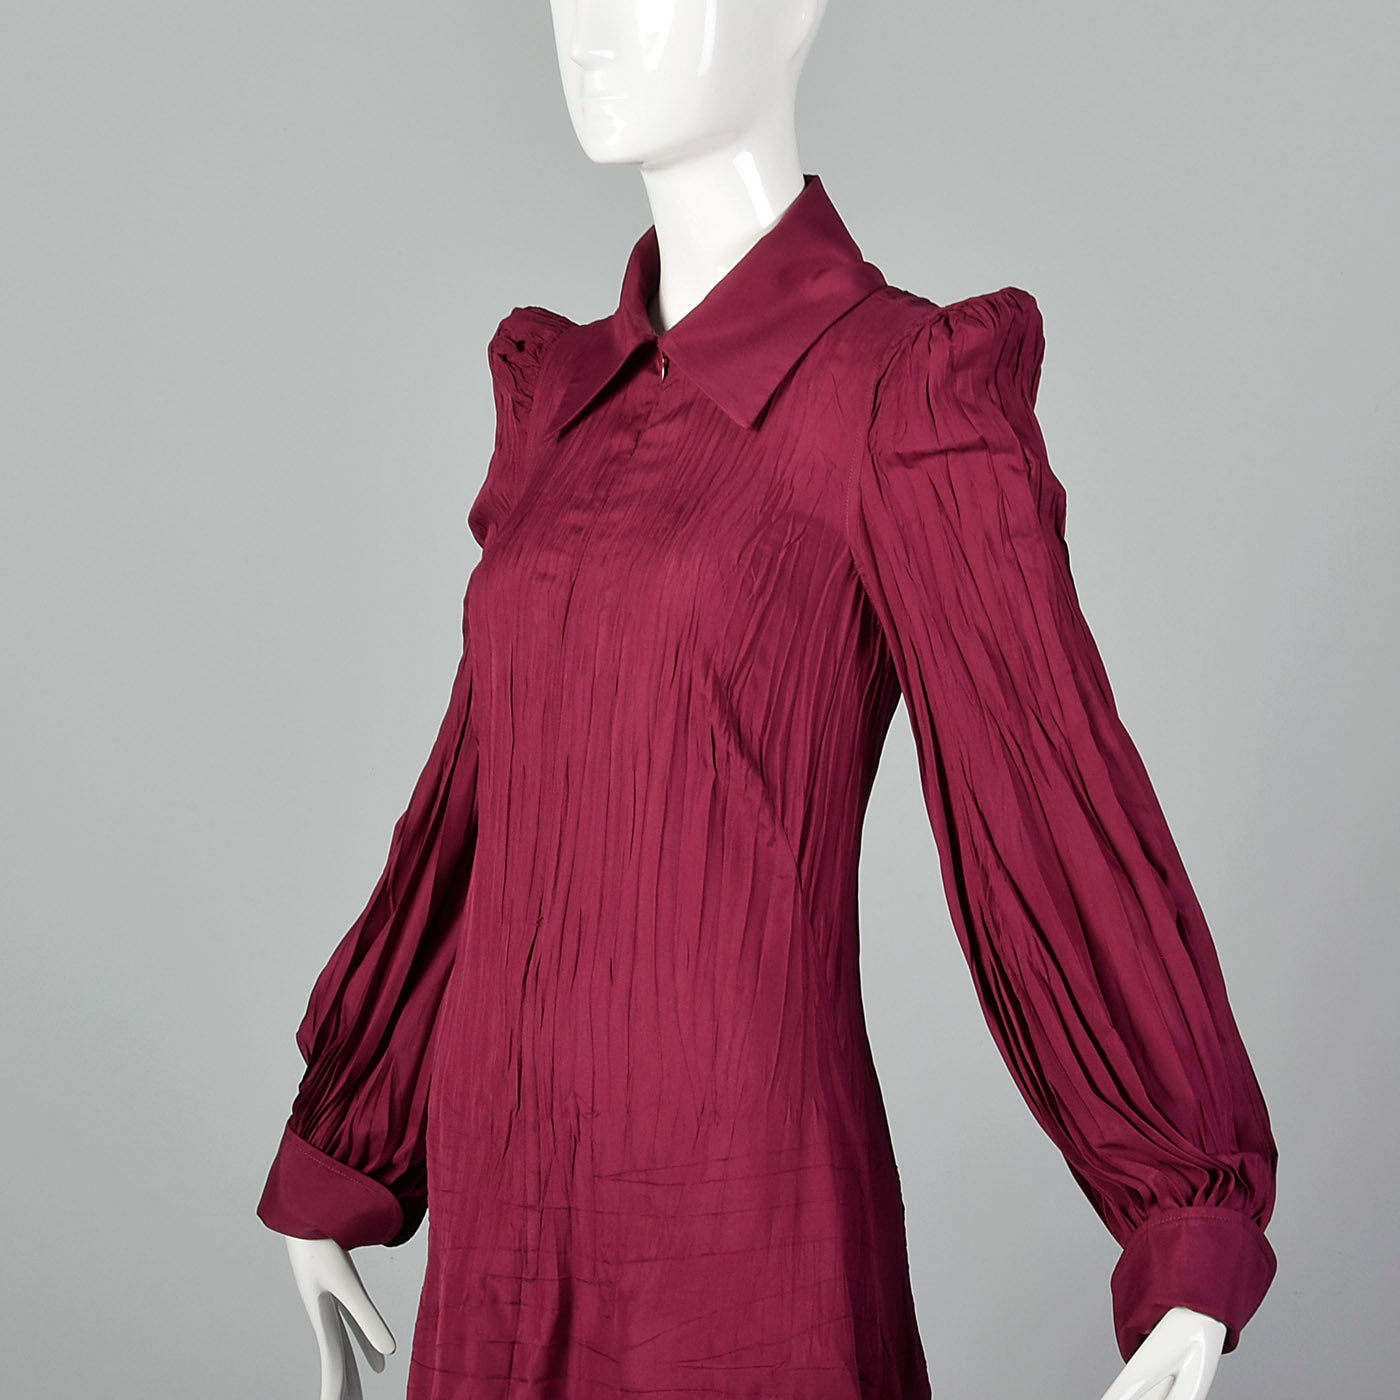 2010s Pleated Magenta Dress